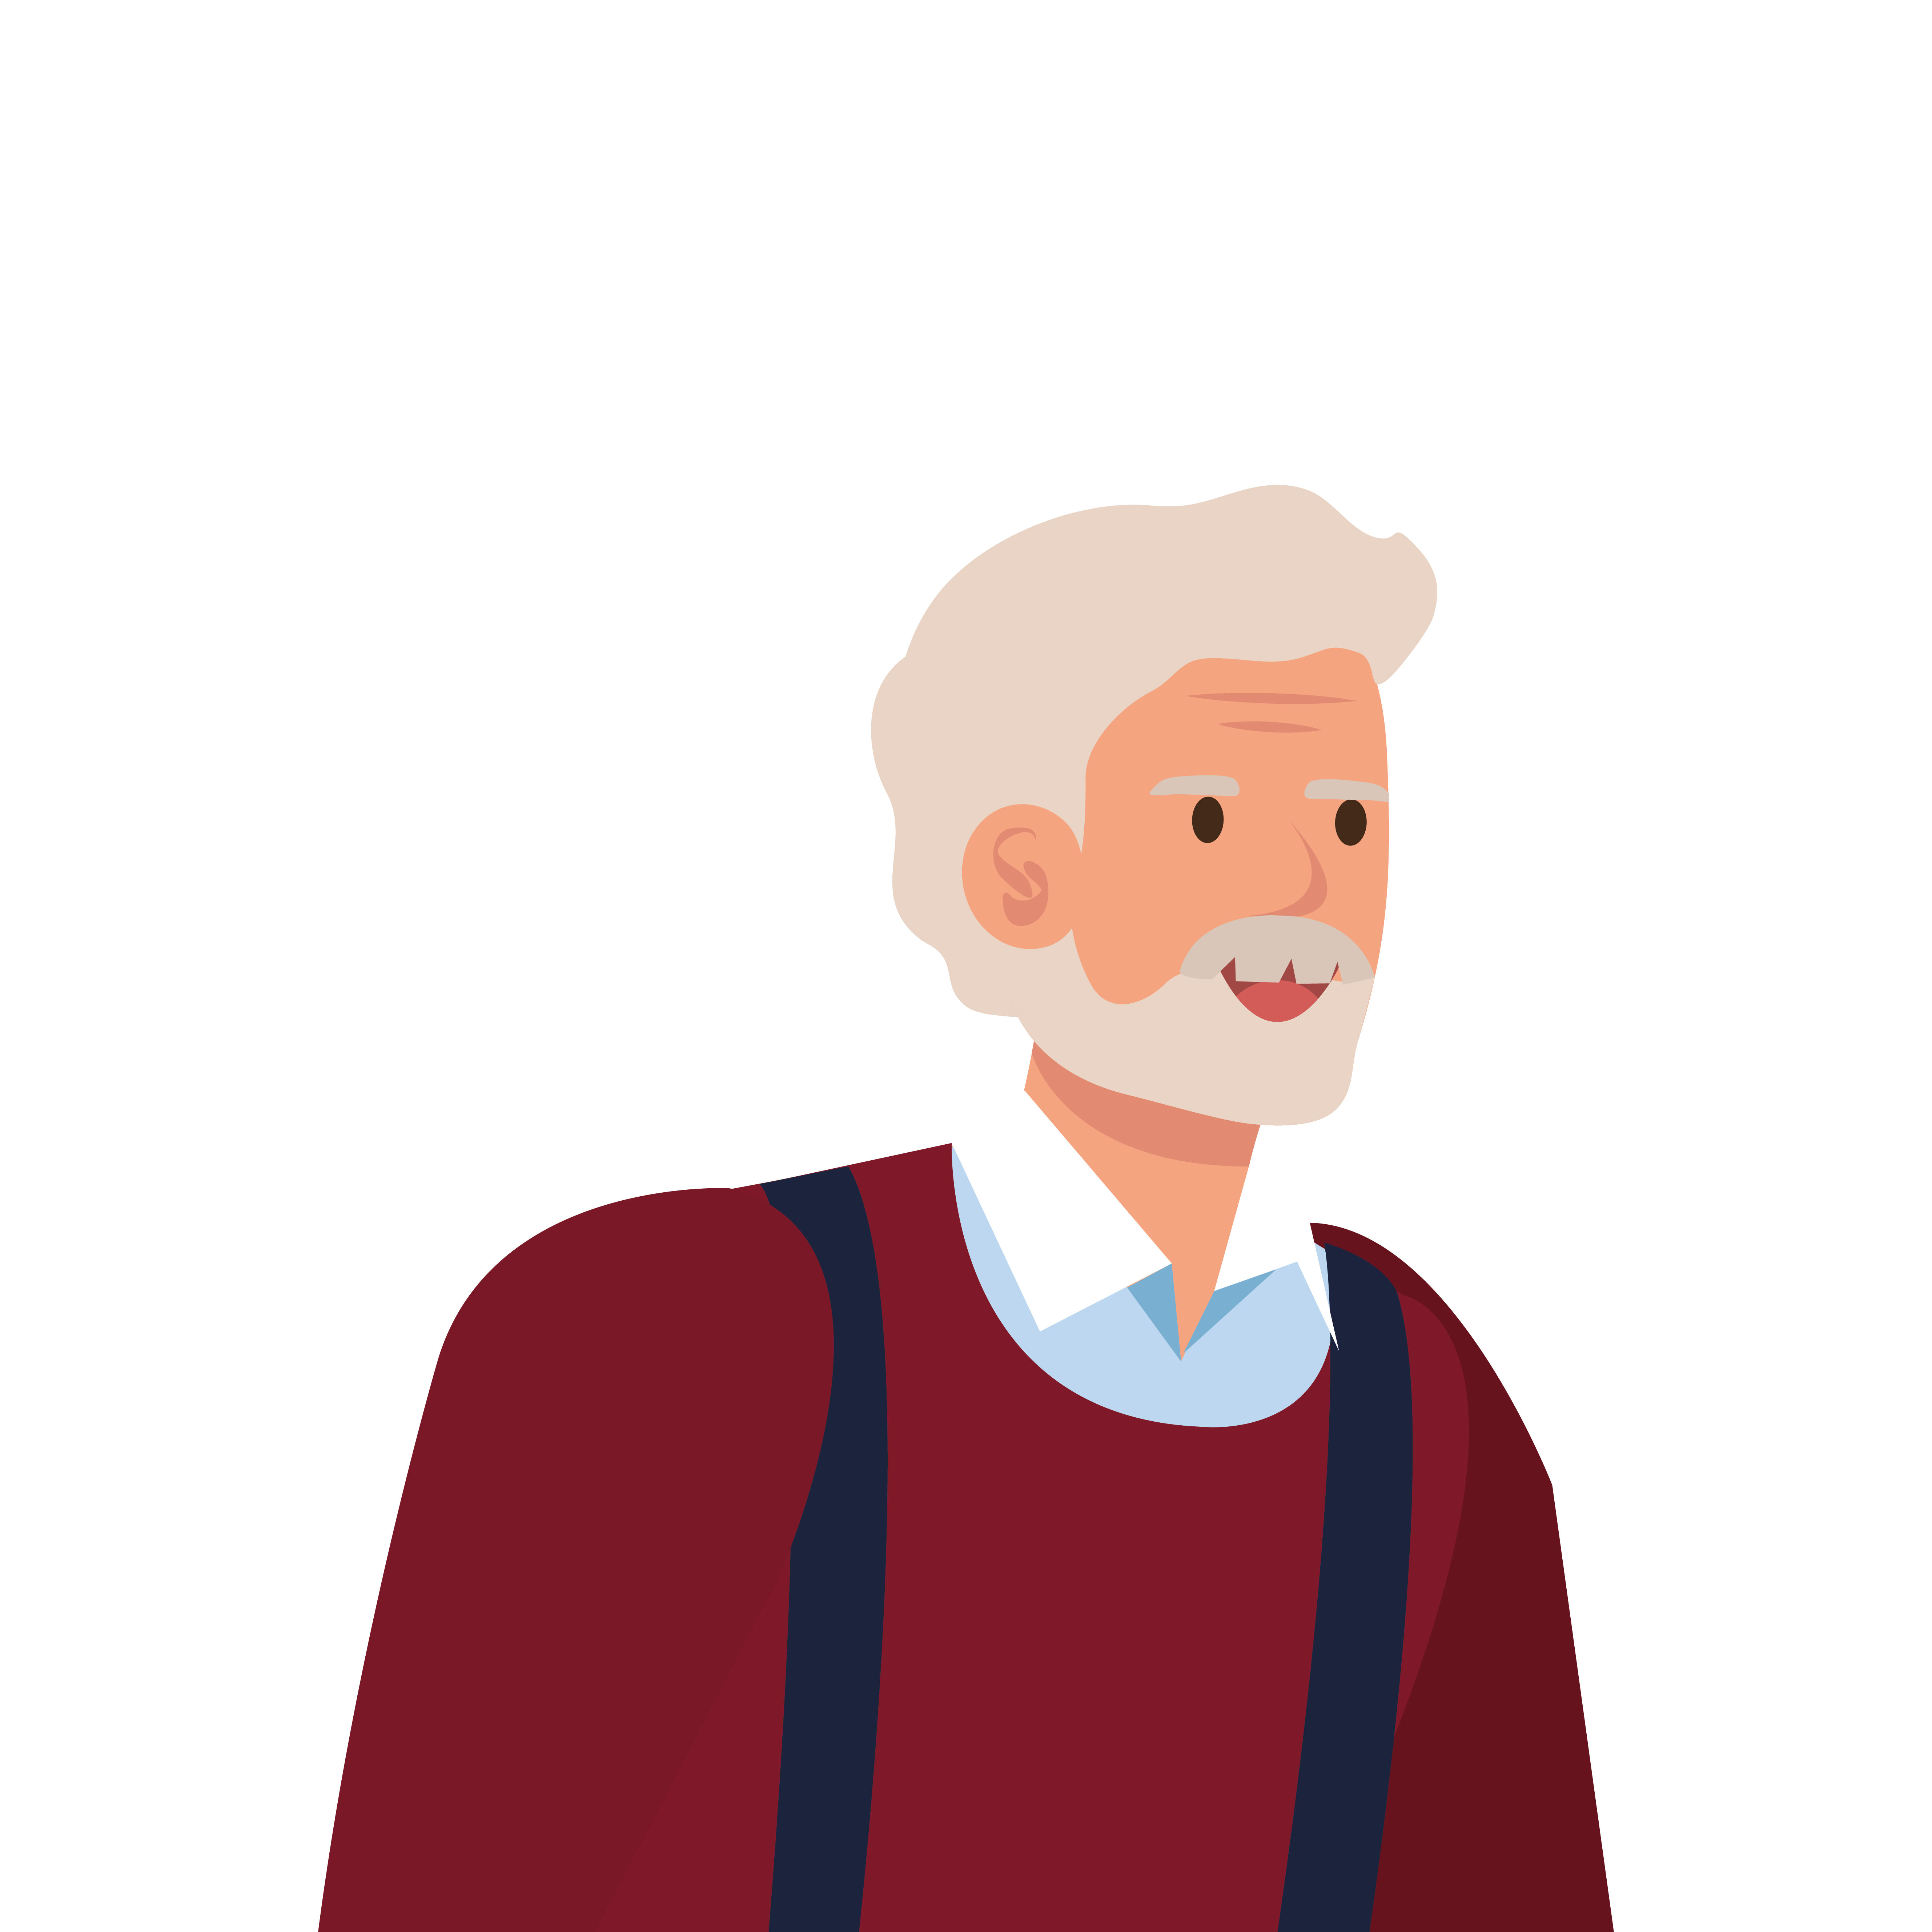 Old man avatar character Royalty Free Vector Image